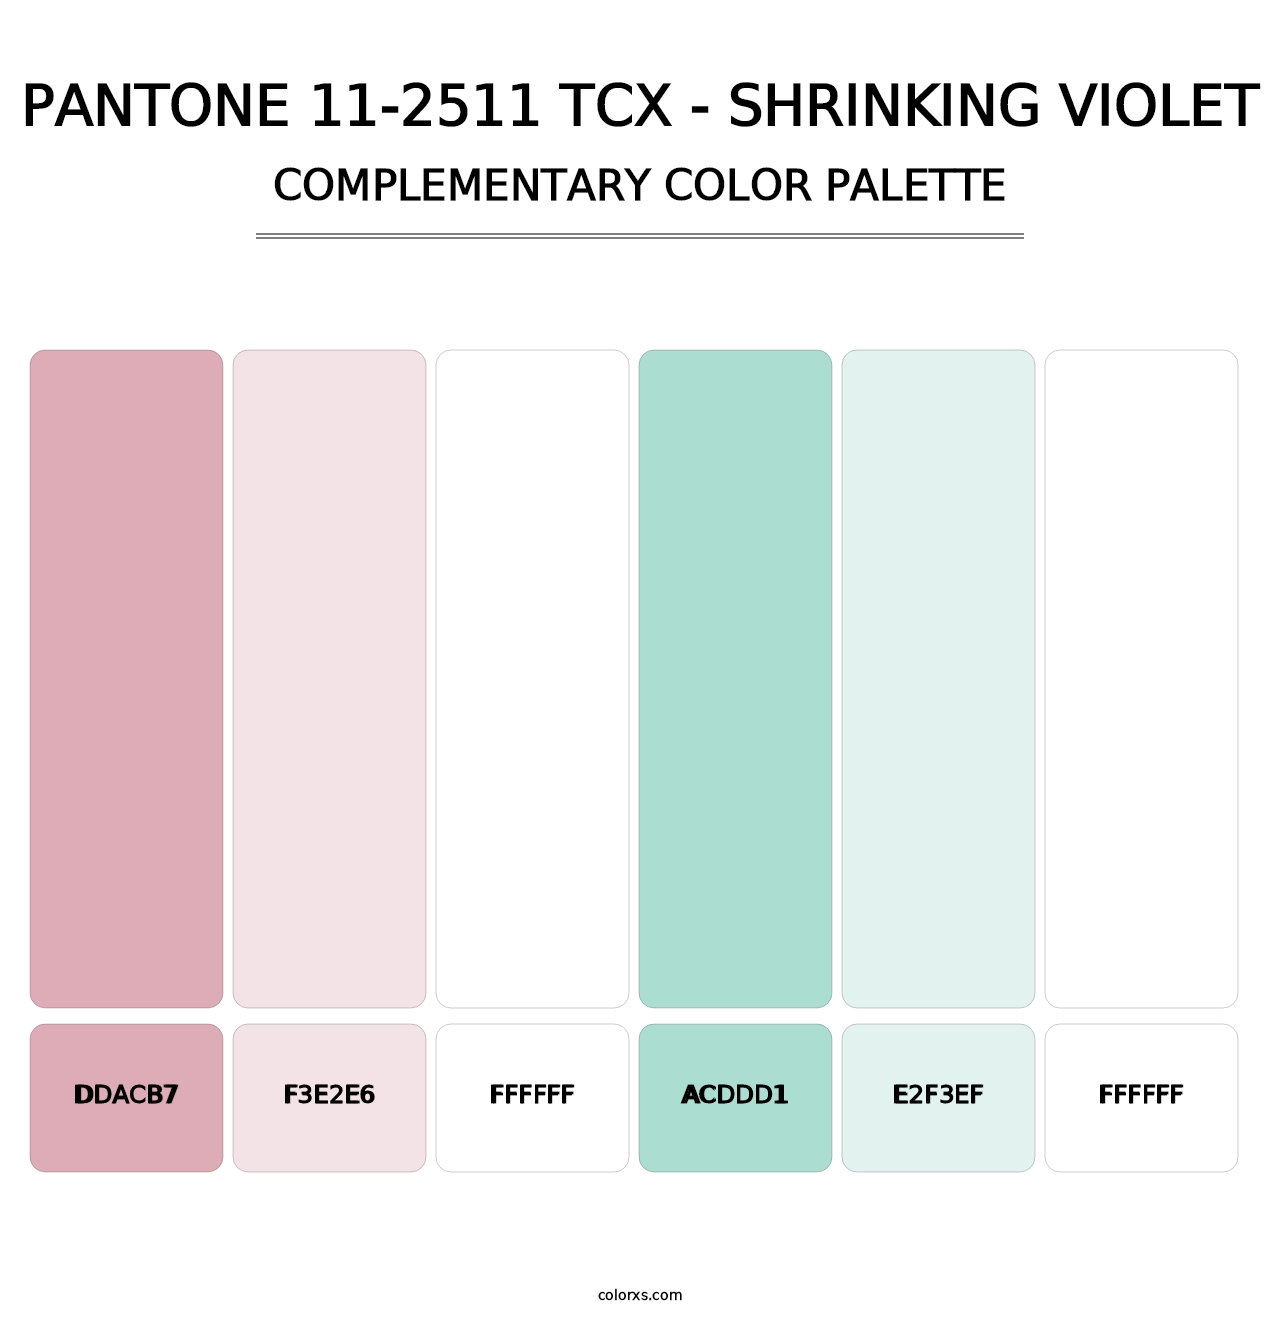 PANTONE 11-2511 TCX - Shrinking Violet - Complementary Color Palette